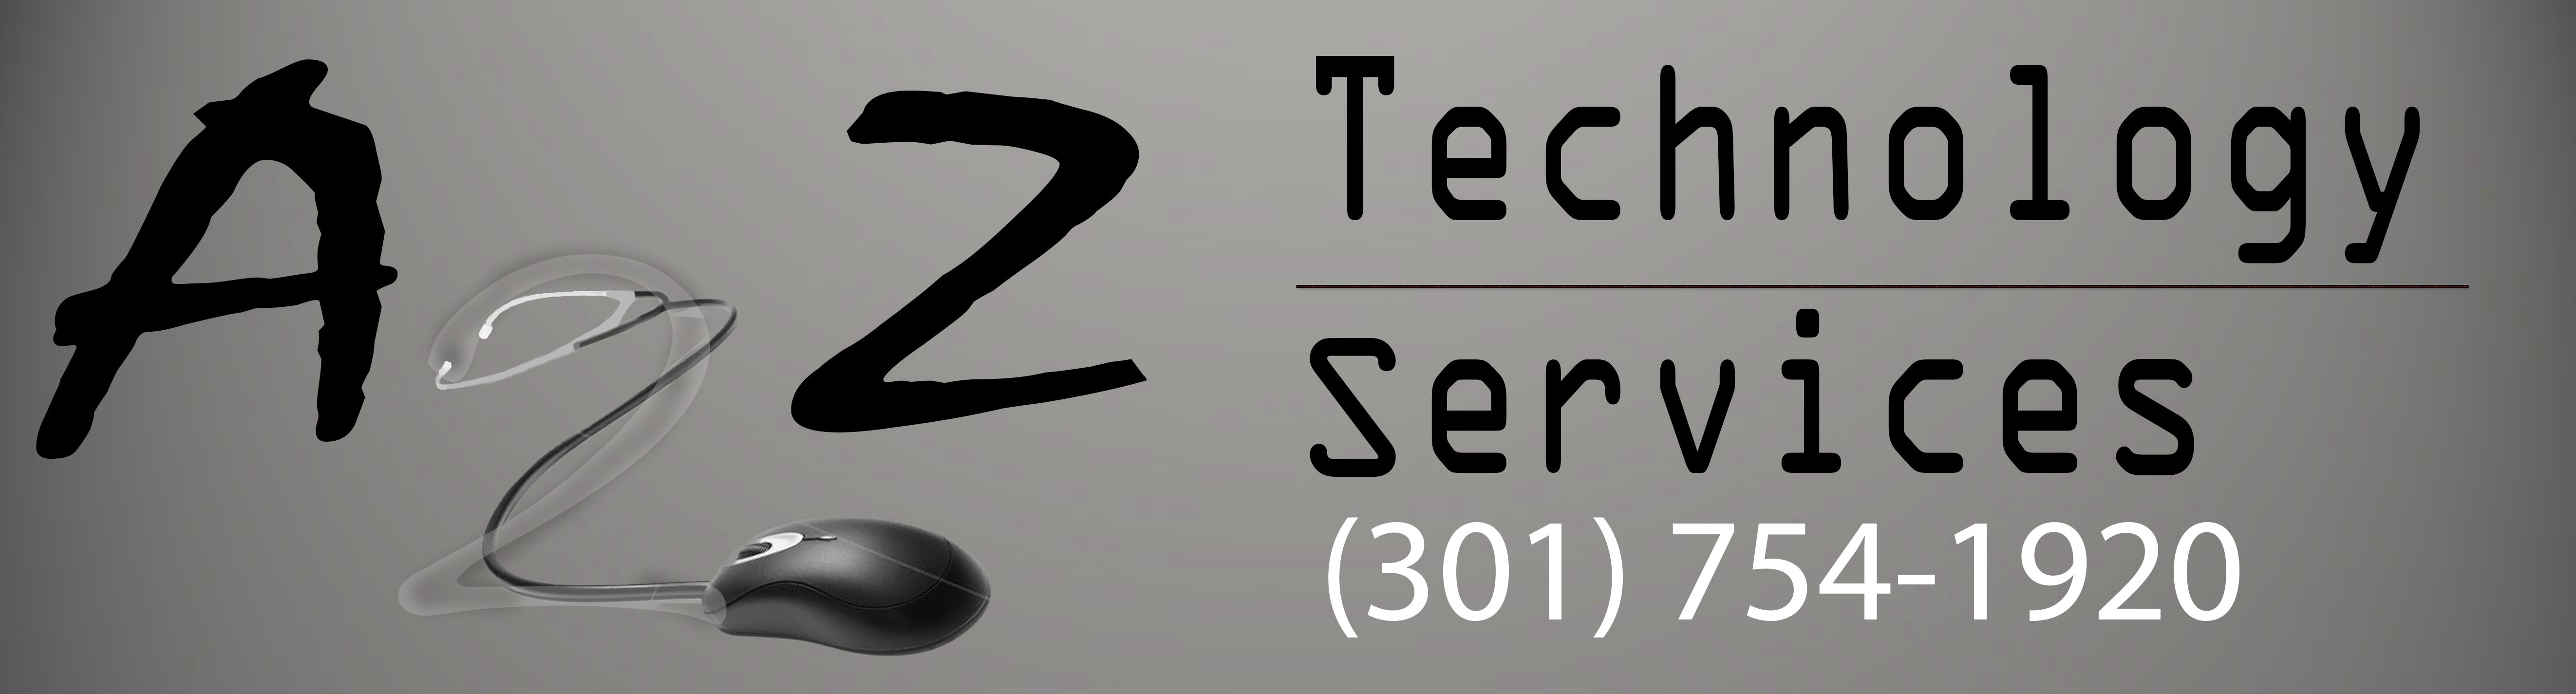 A2Z Technology Services, LLC Logo